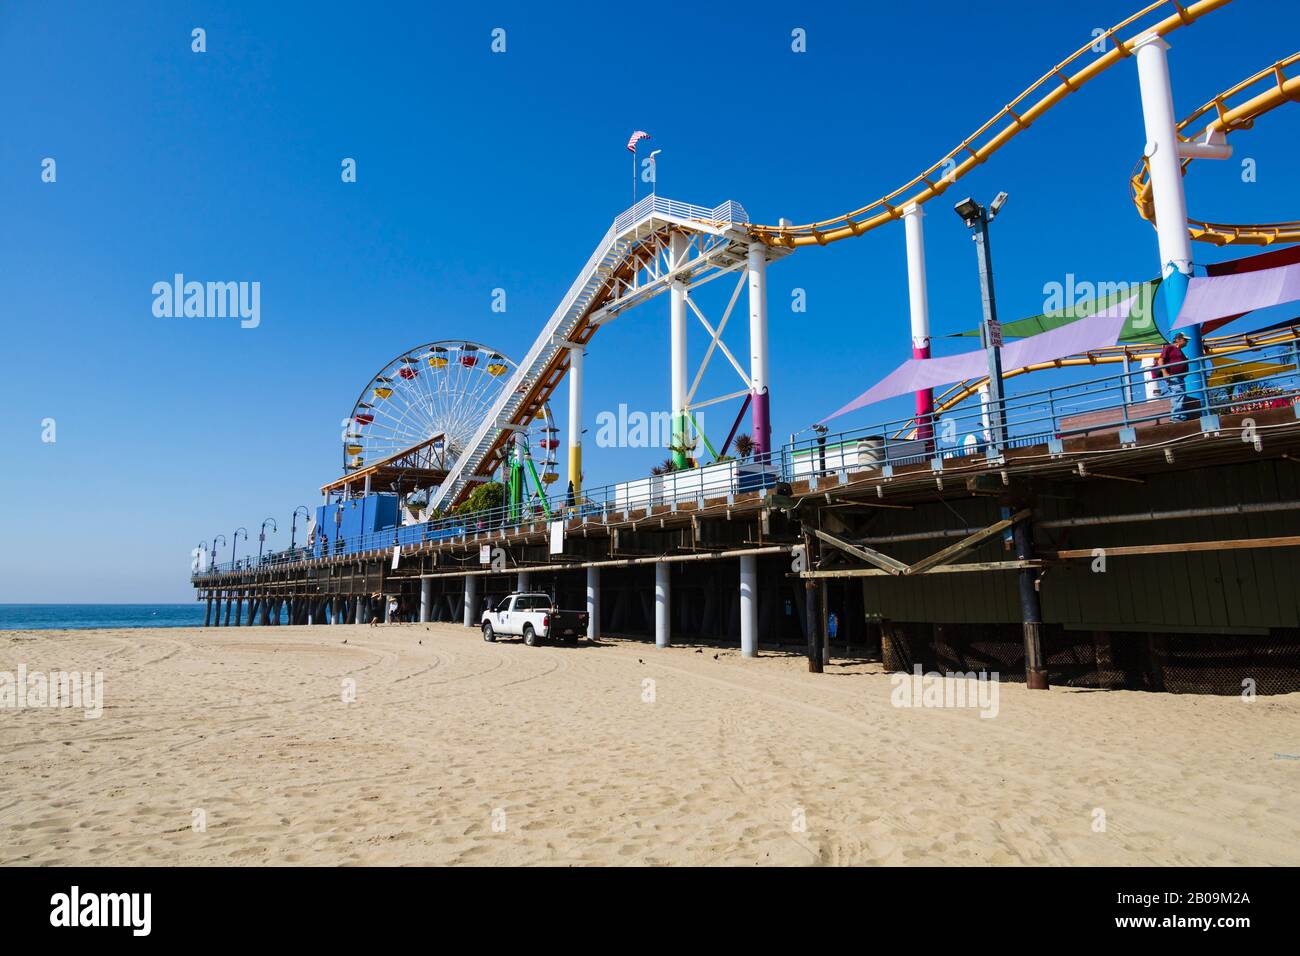 Big wheel and roller coaster amusements on Santa Monica pier, Los Angeles, California, United States of America Stock Photo